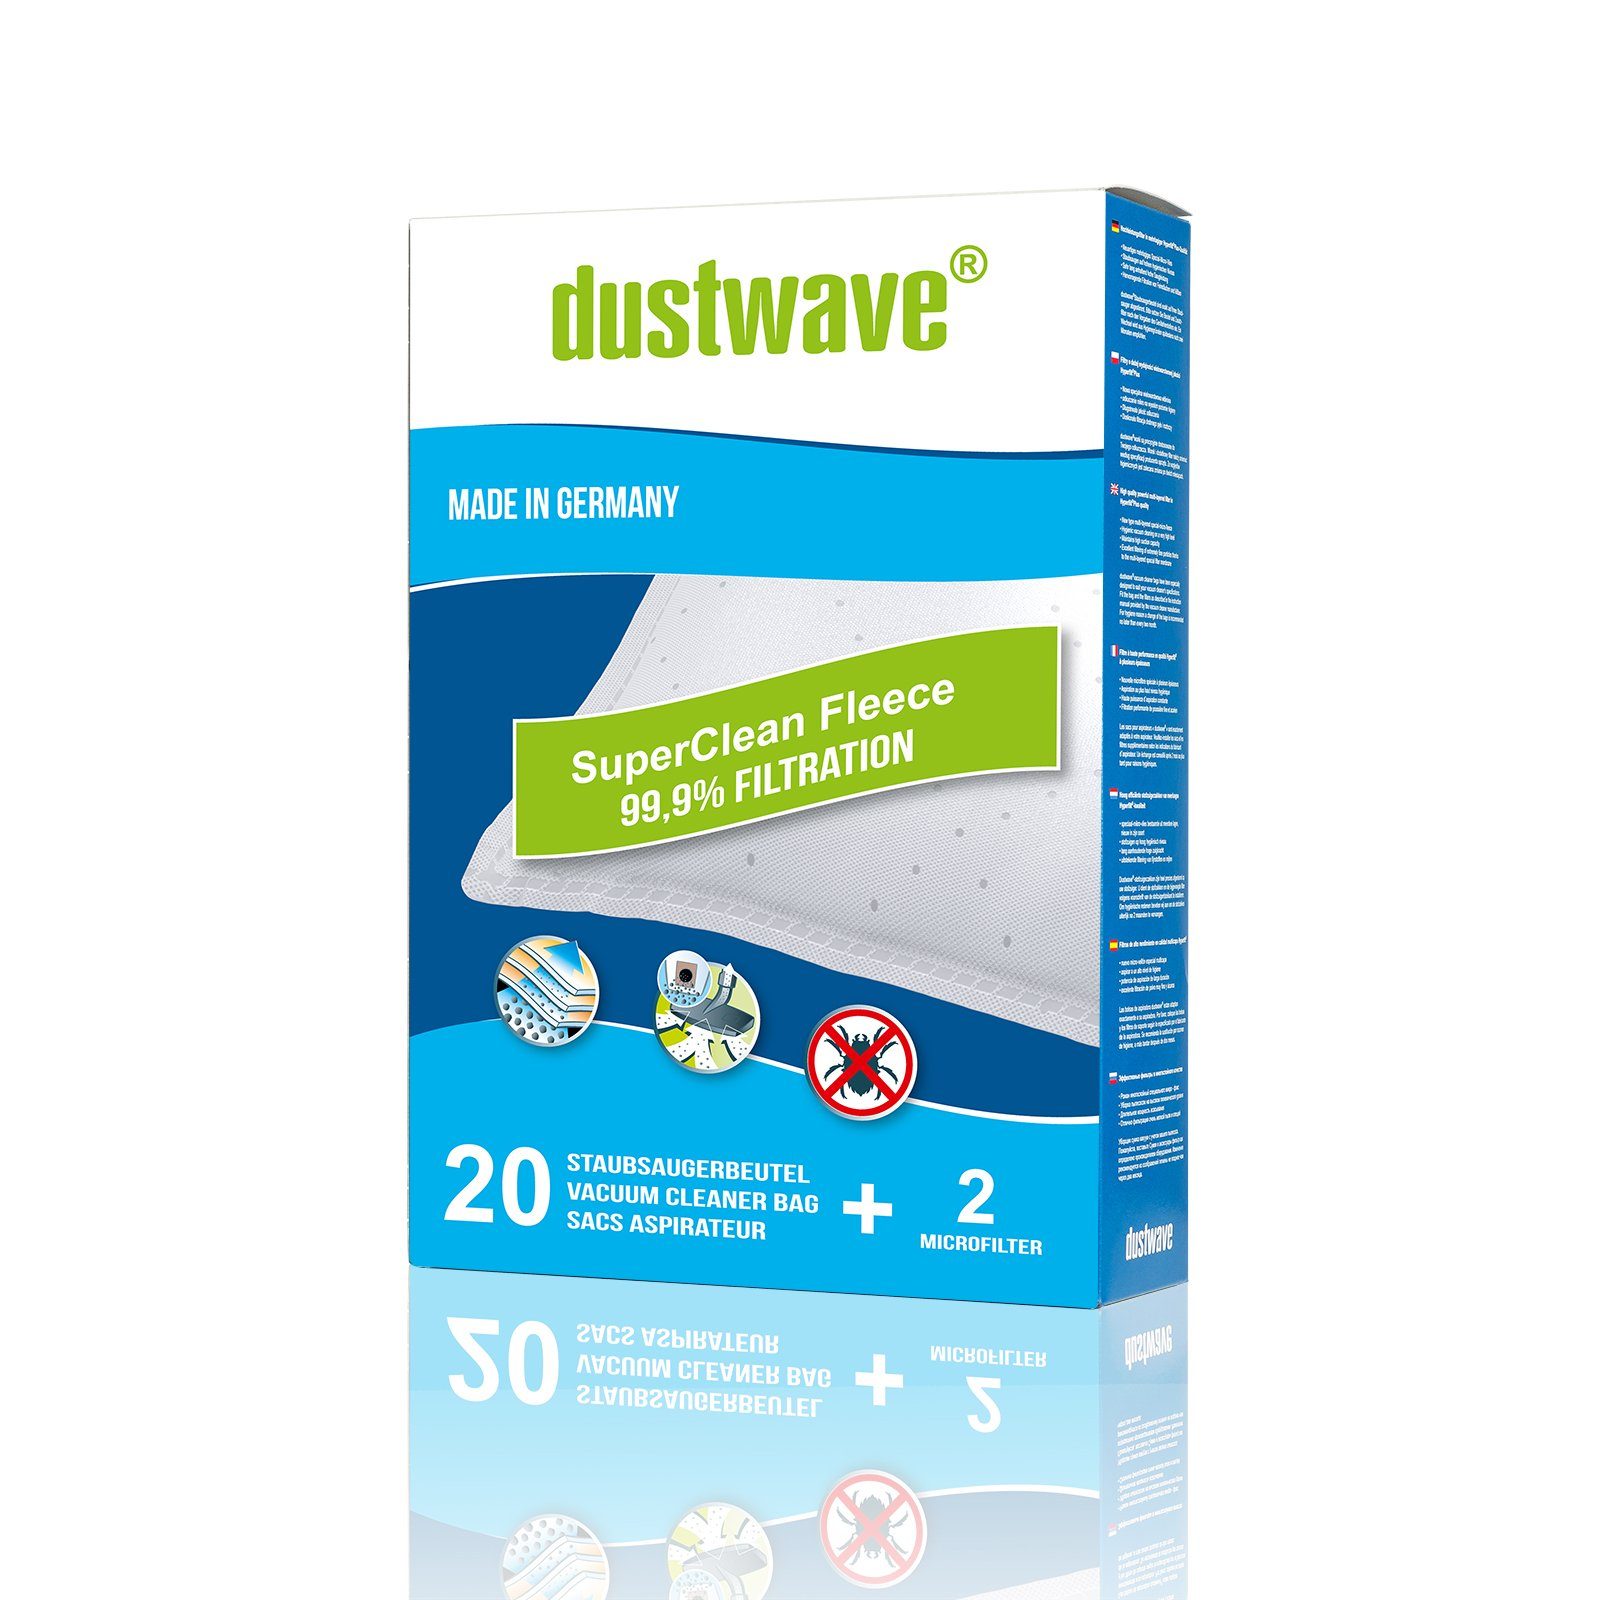 Dustwave Staubsaugerbeutel Megapack, passend für Adix DIV 370, 20 St., Megapack, 20 Staubsaugerbeutel + 2 Hepa-Filter (ca. 15x15cm - zuschneidbar) Adix DIV 370 - Standard